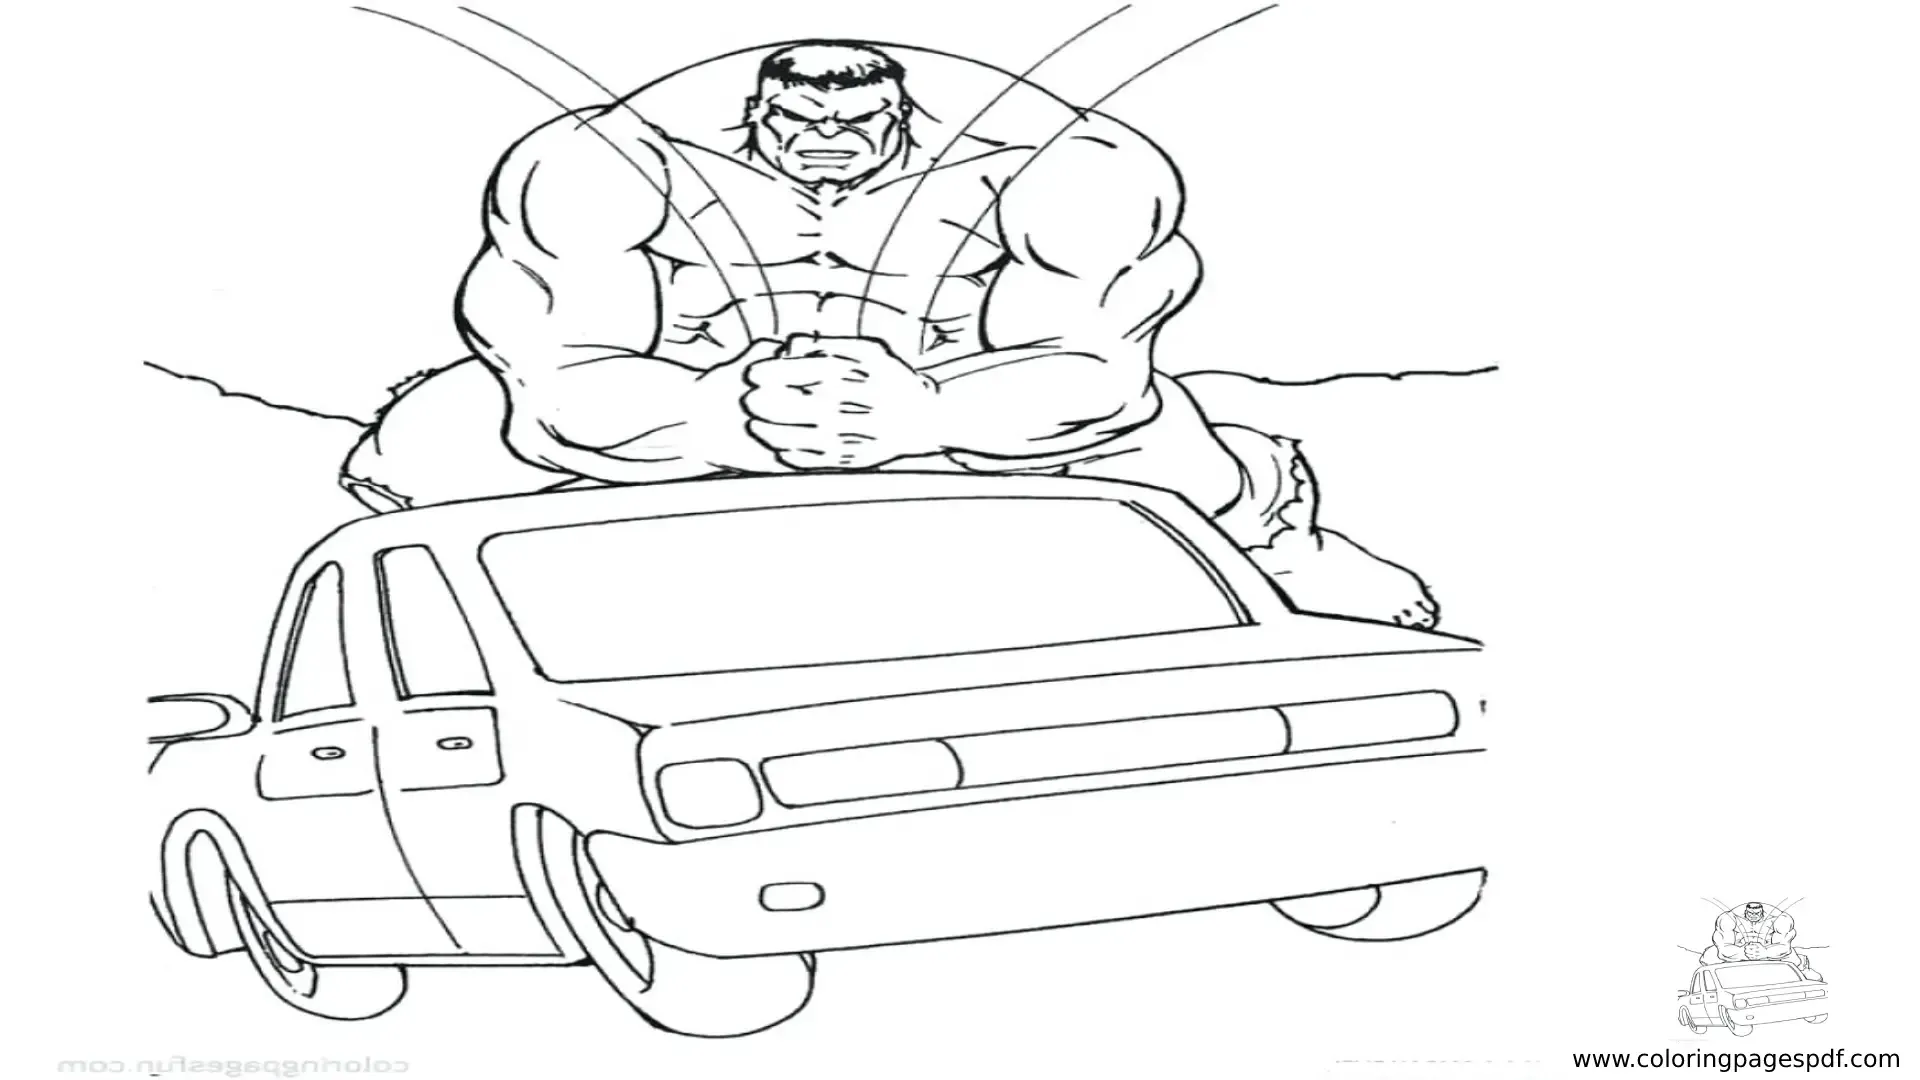 Coloring Pages Of Hulk Smashing A Car